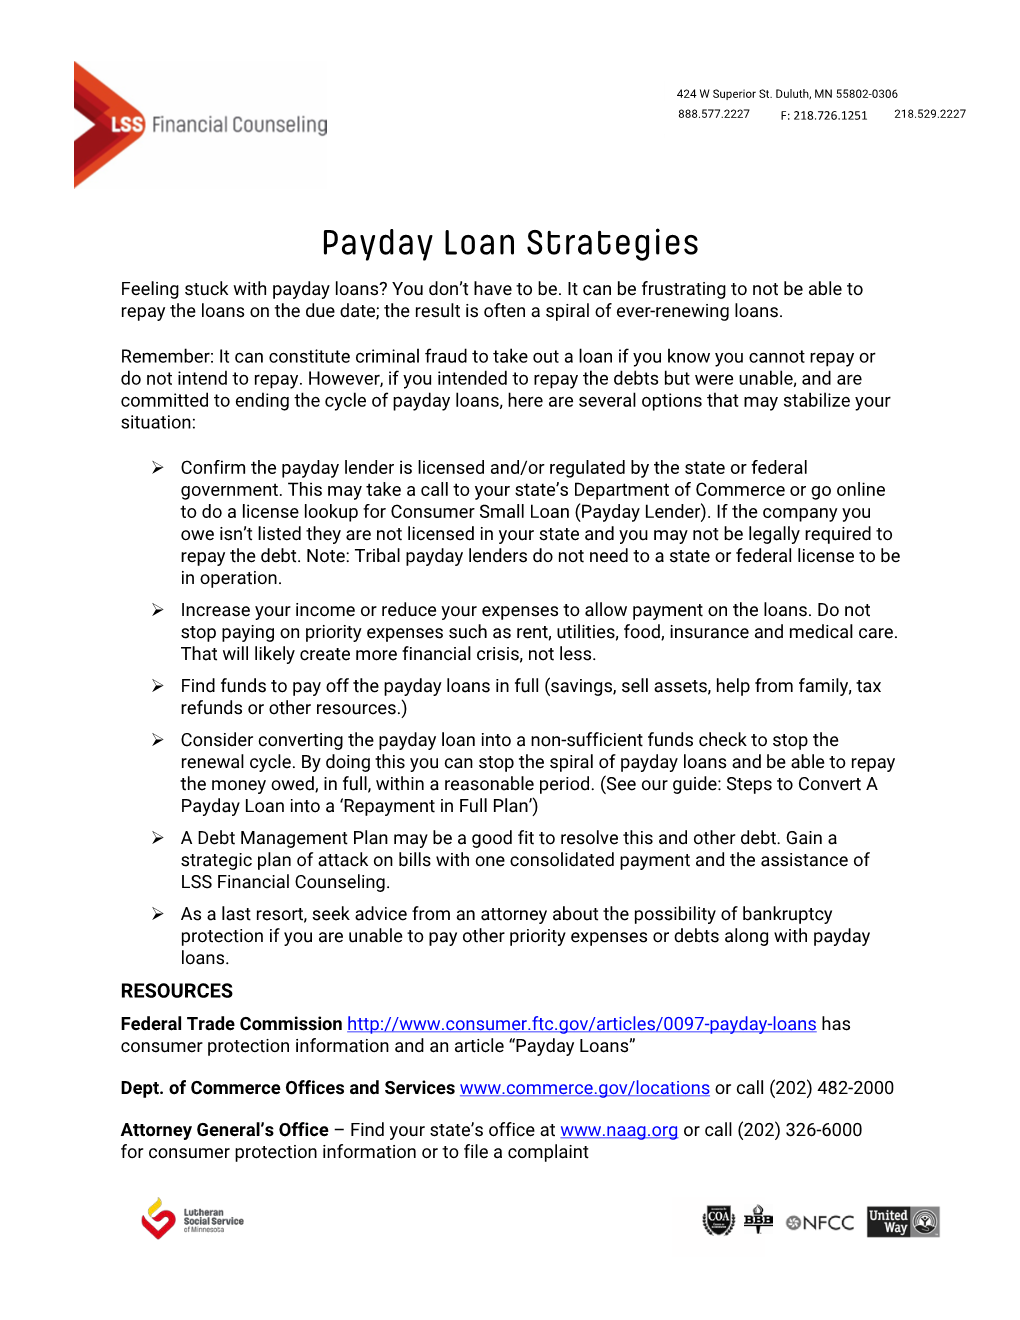 Payday Loan Strategies